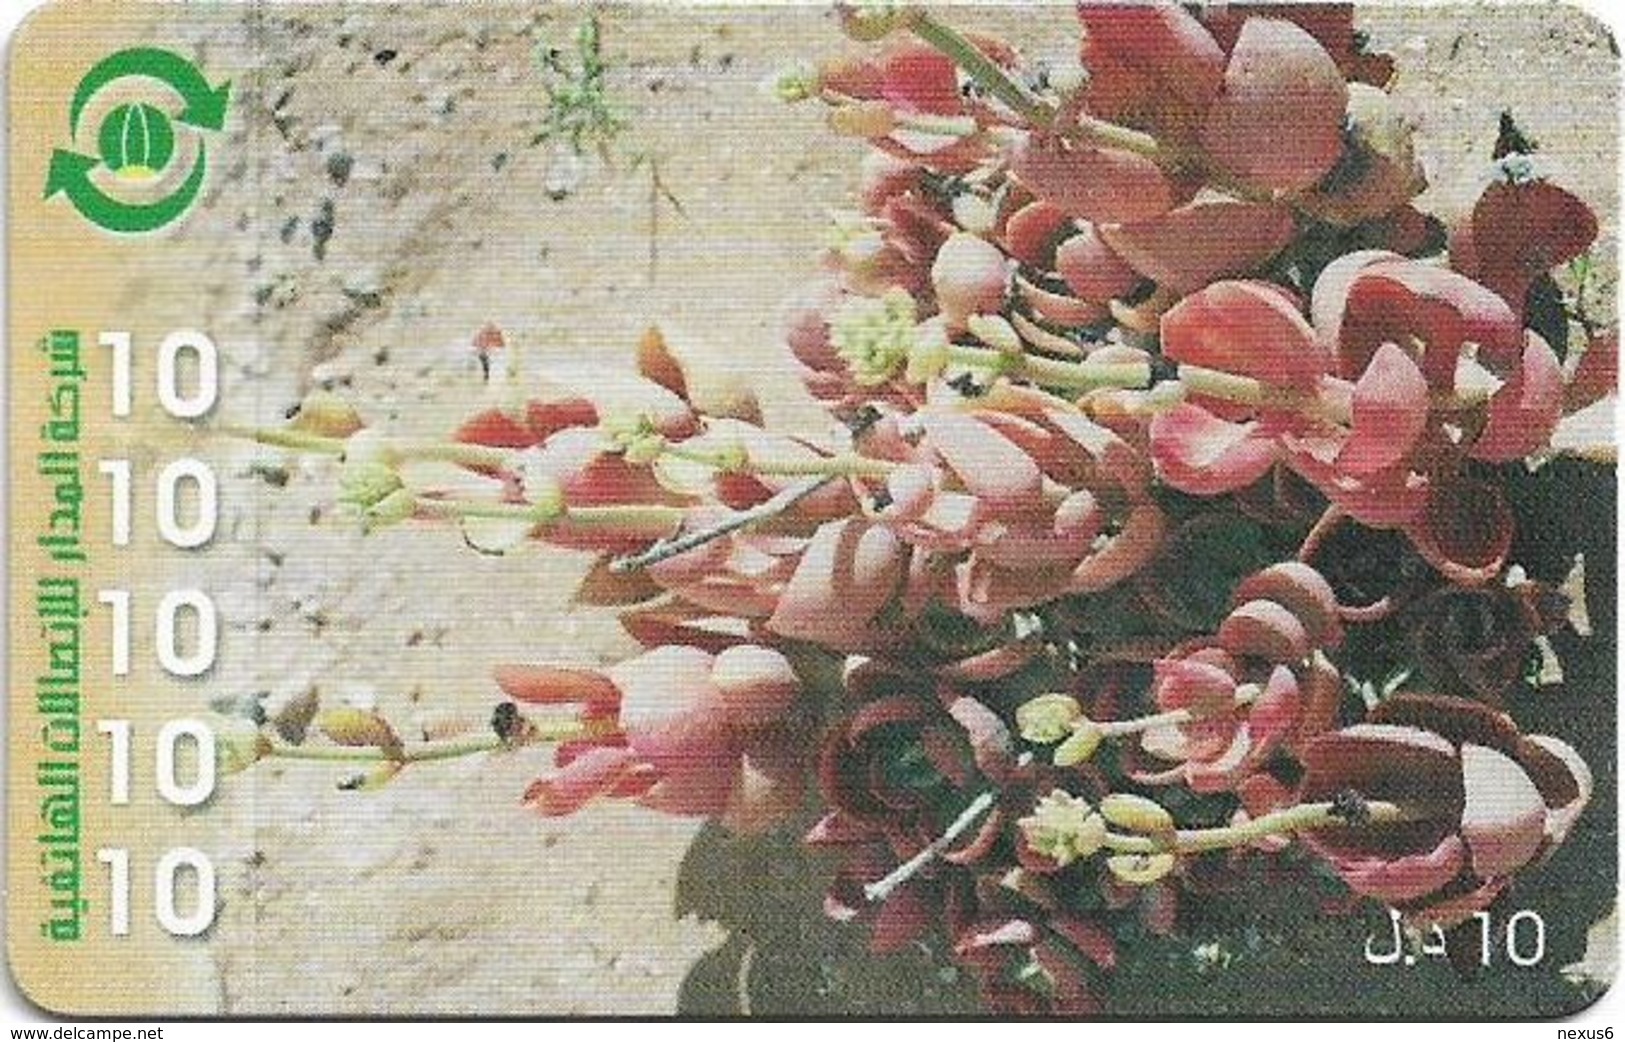 Libya - Almadar - Flowers, 10LD Prepaid Card, Used - Libia